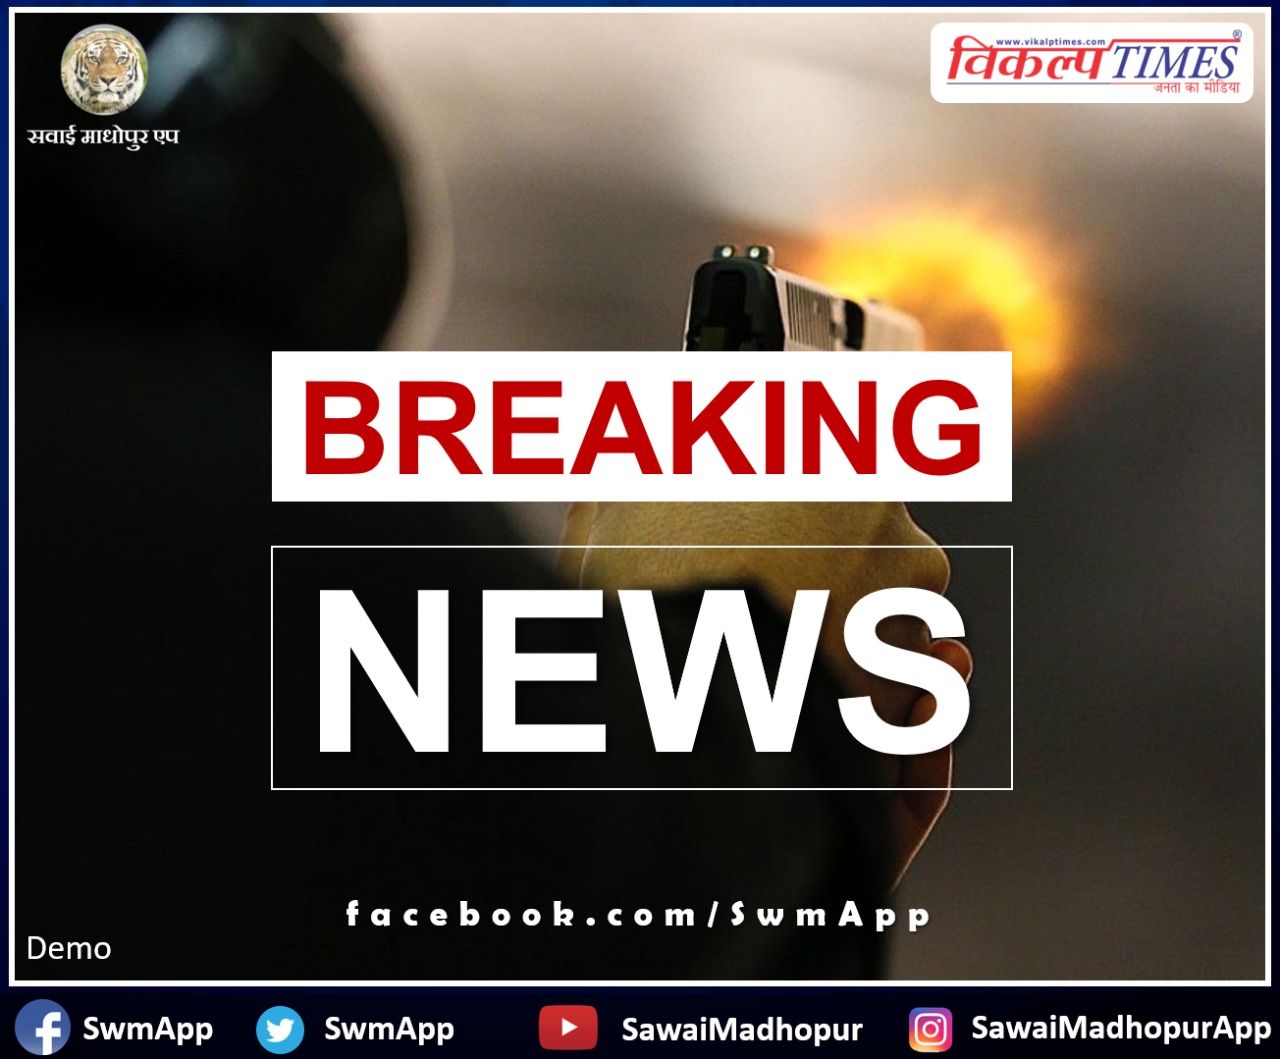 Firing at petrol pump in Sarasop village, petrol pump owner injured in firing in sawai madhopur